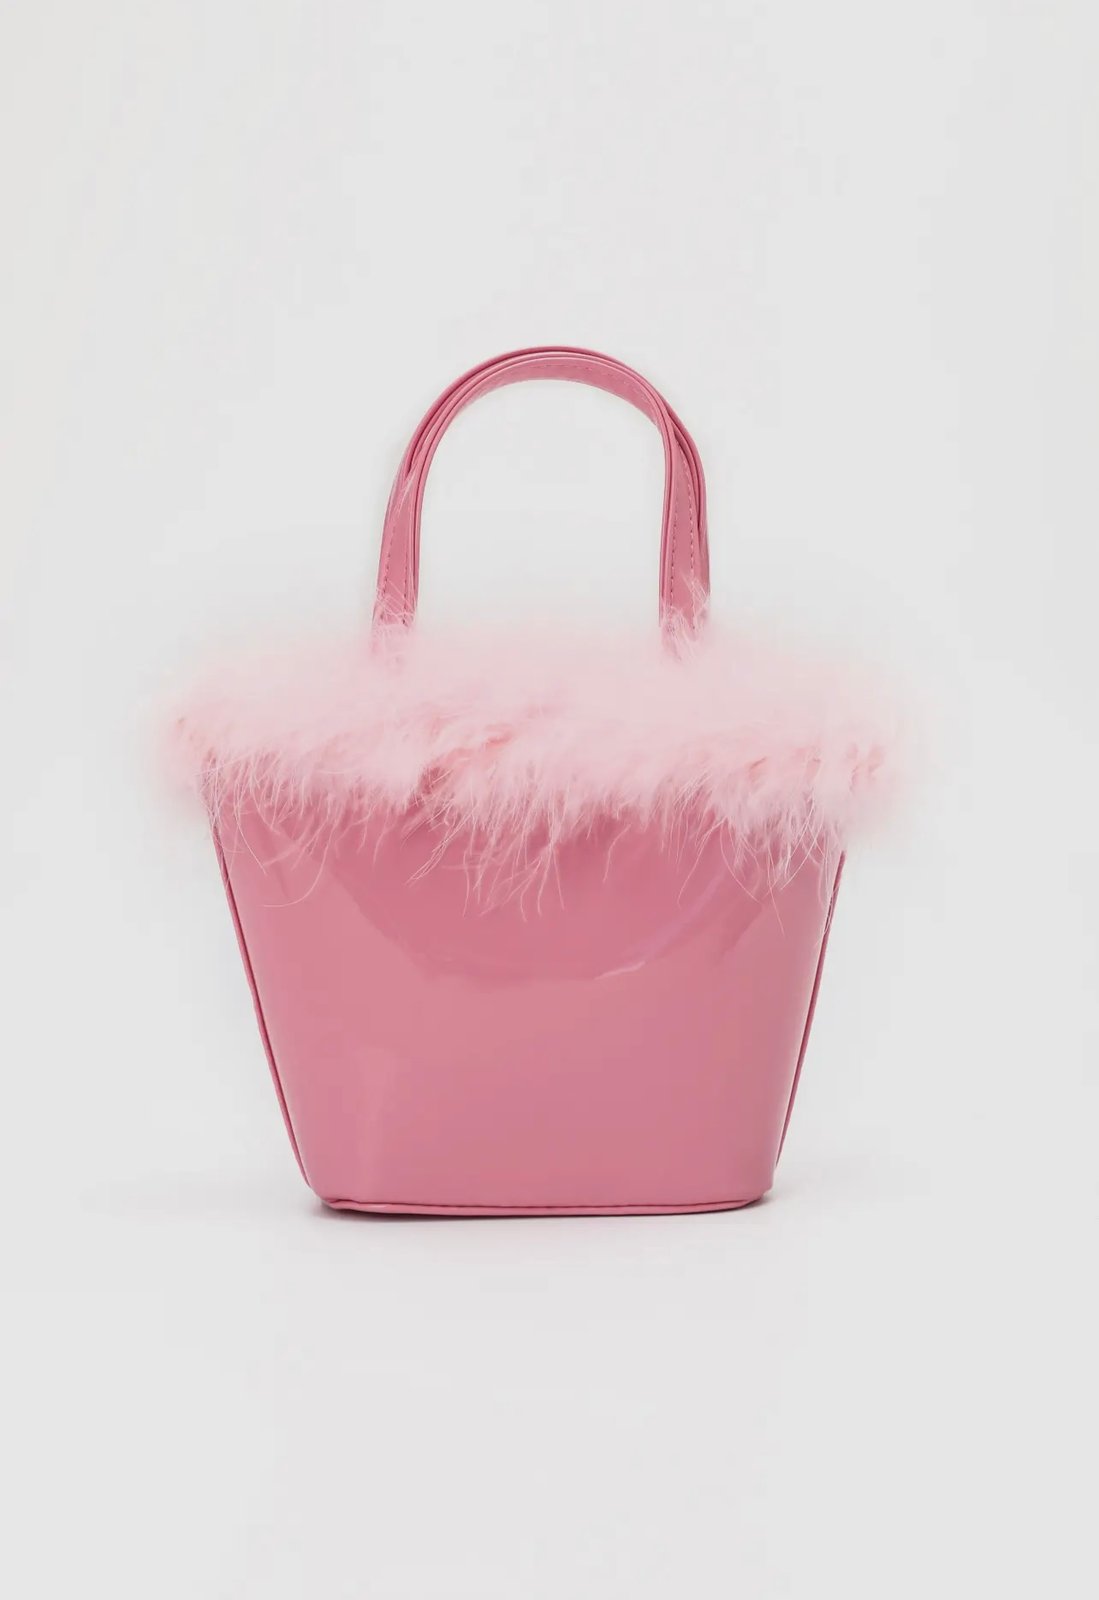 Kids Baby Girls Boys Cartoon Animal Bag Cute Design Purse Handbags Bags |  eBay